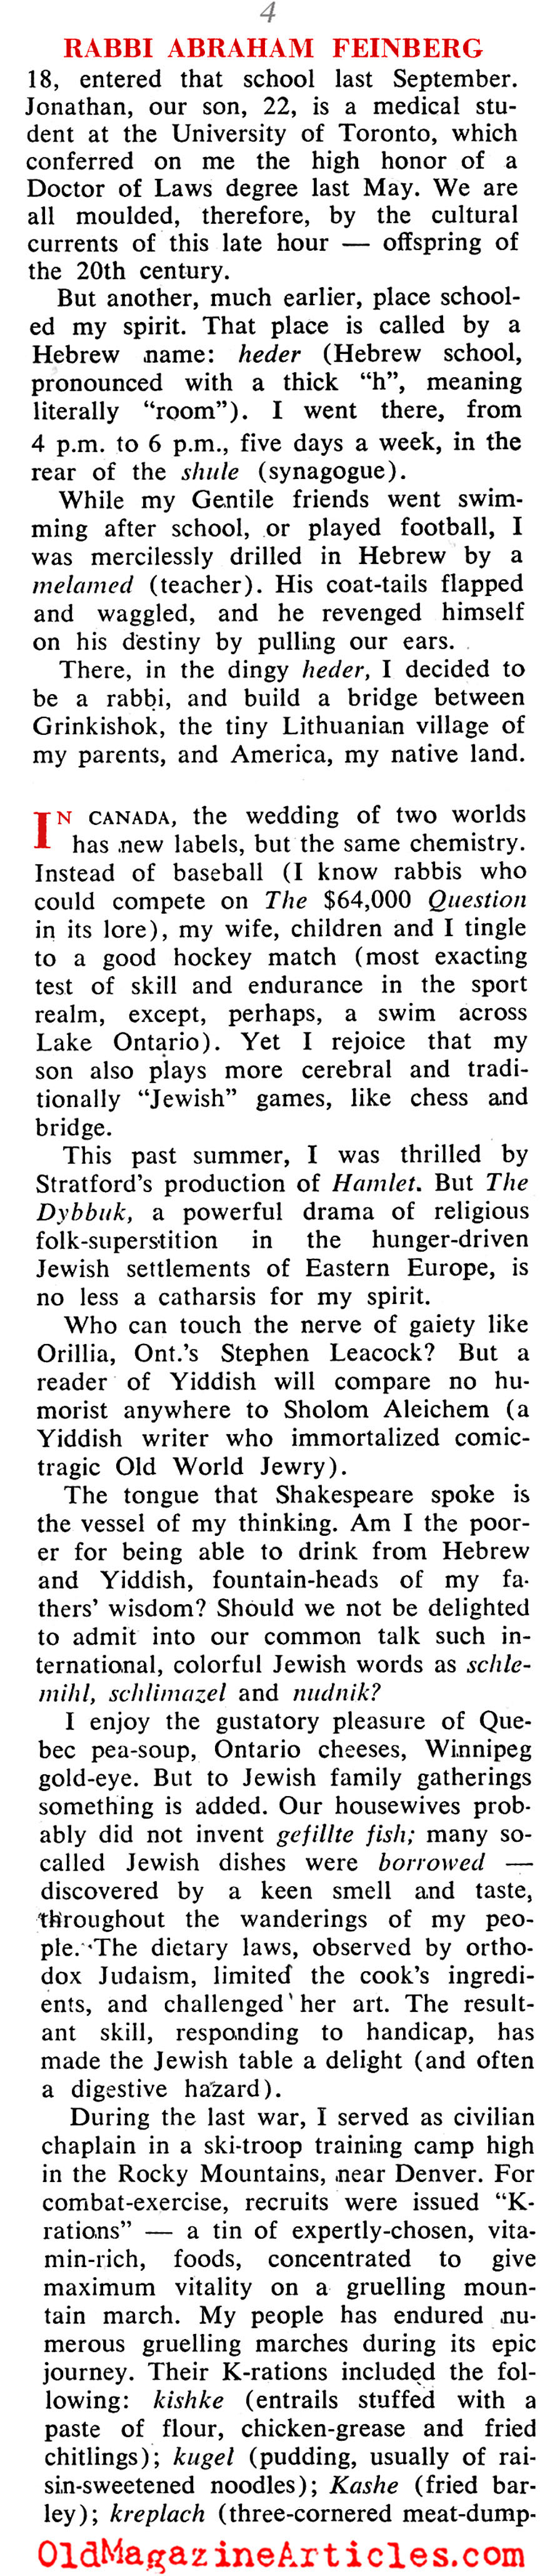 ''It's Fun to be a Jew'' (Liberty Magazine, 1957)